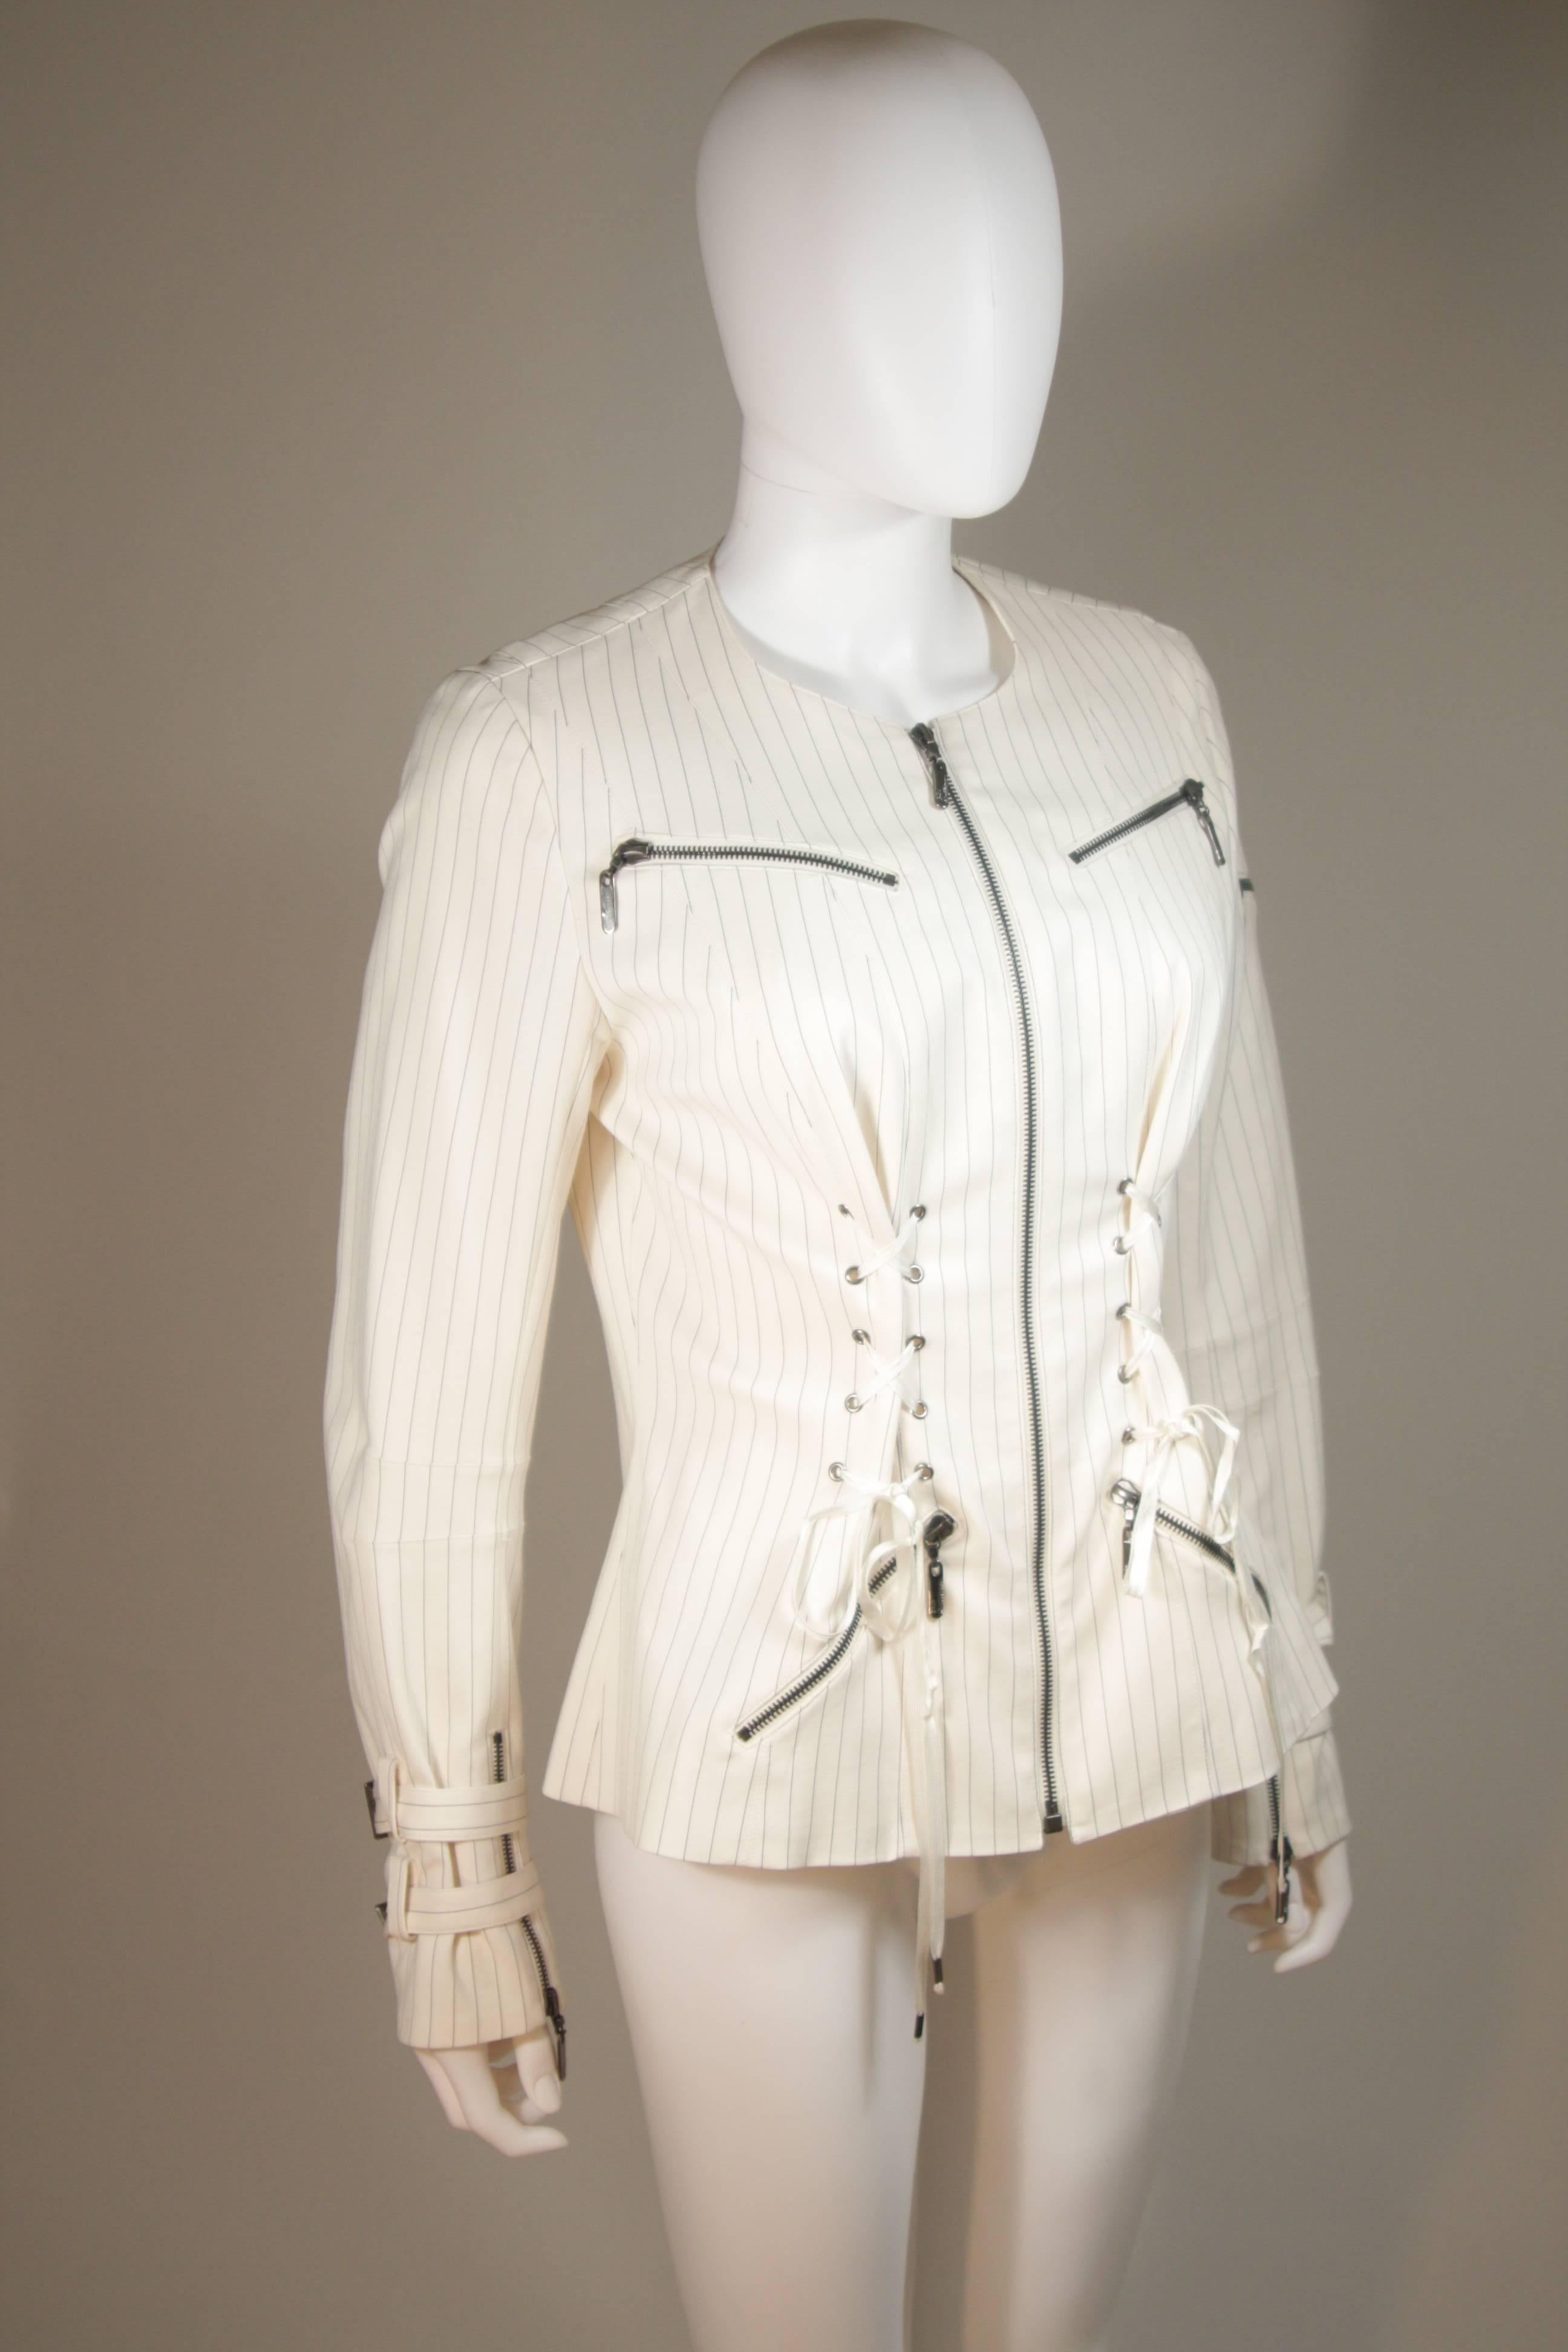 Beige JOHN GALLIANO Off White Pinstripe Zipper Jacket with Corset Details Size 42